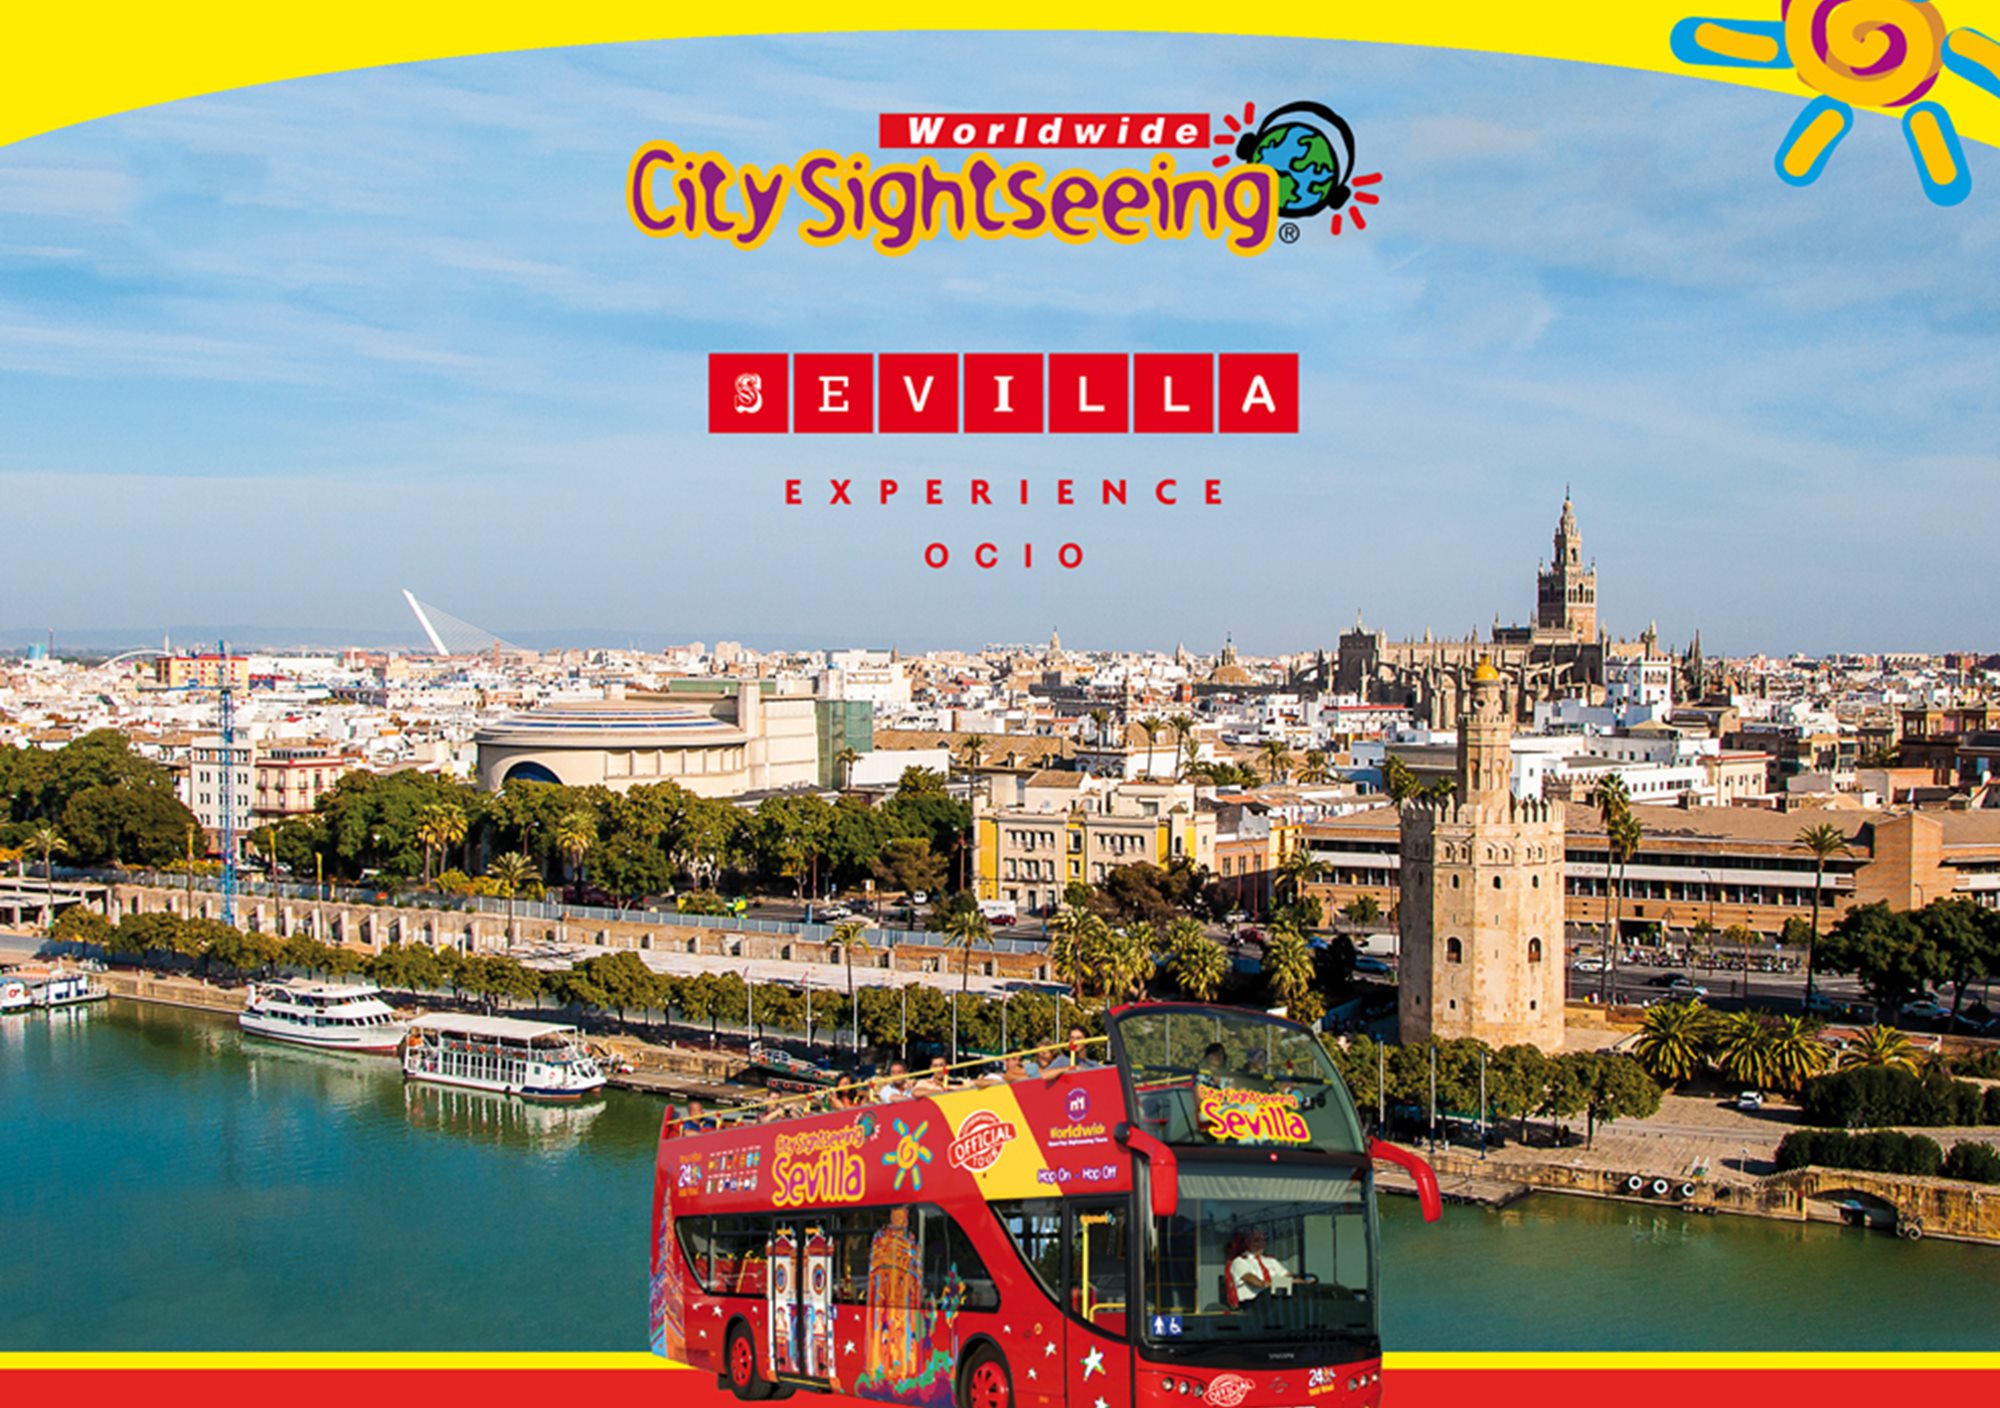 reservieren tickets online City Pass Sightseeing Sevilla Experience